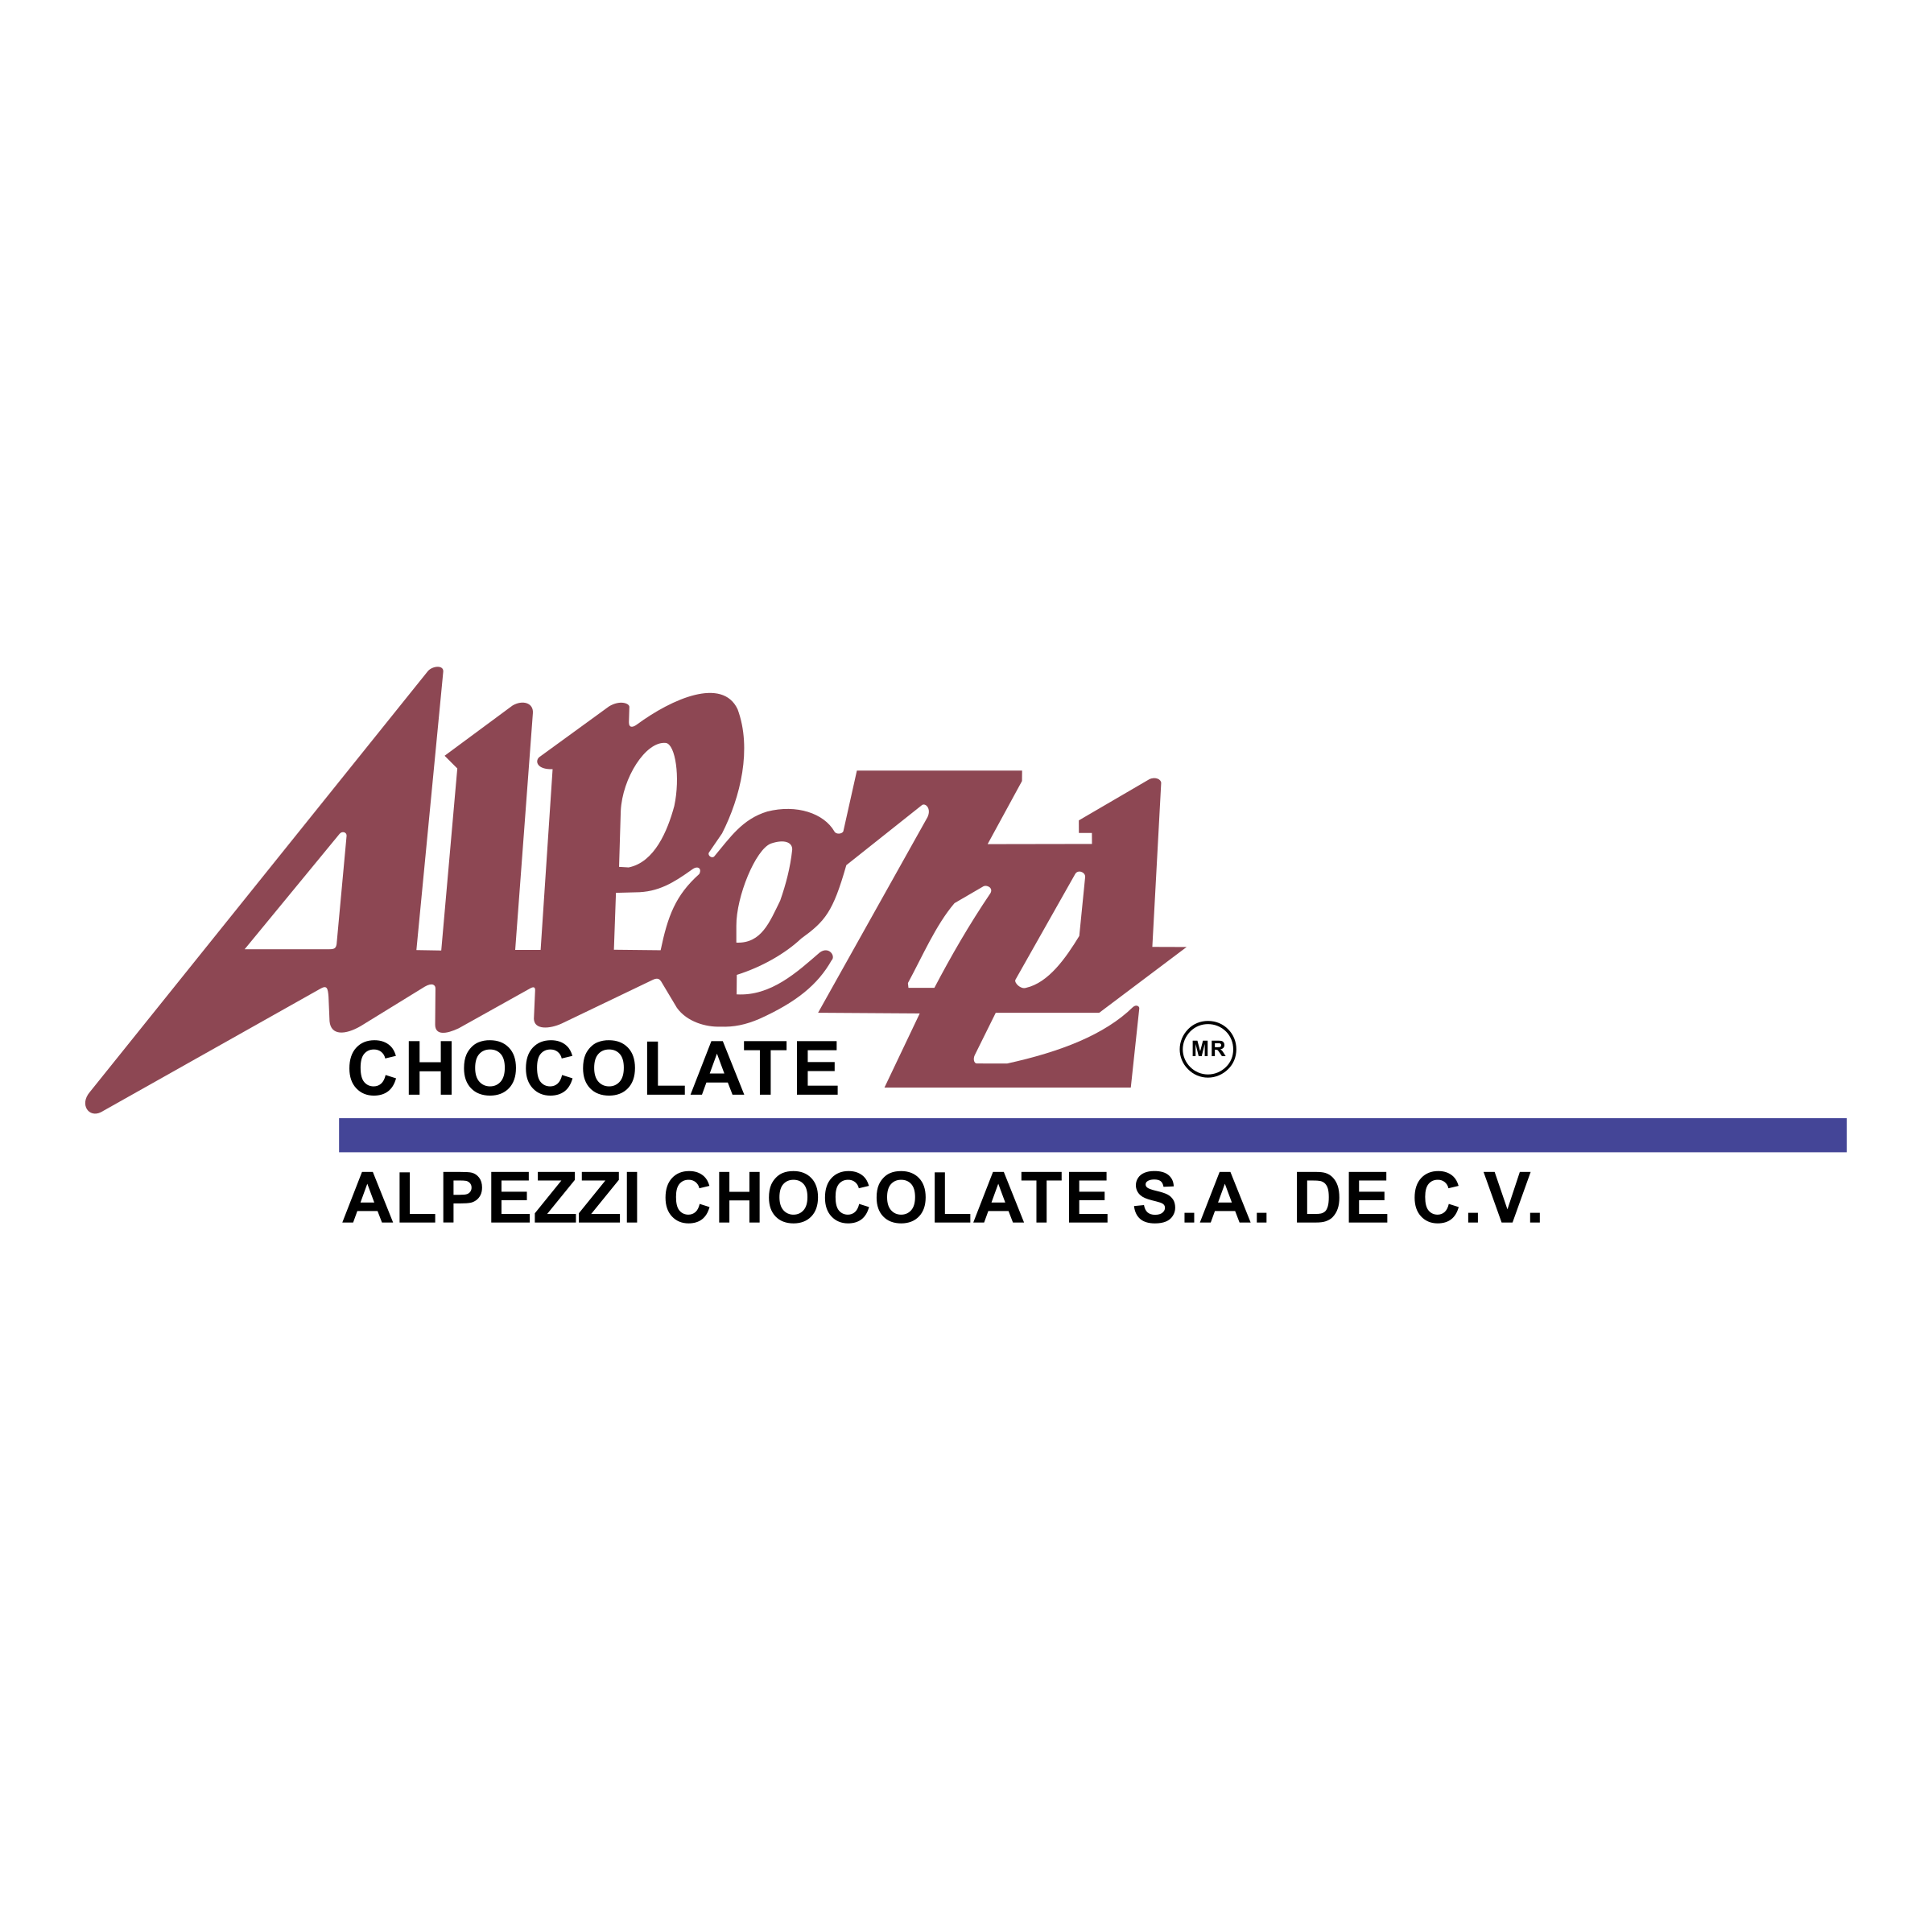 alpezzi-logo-png-transparent